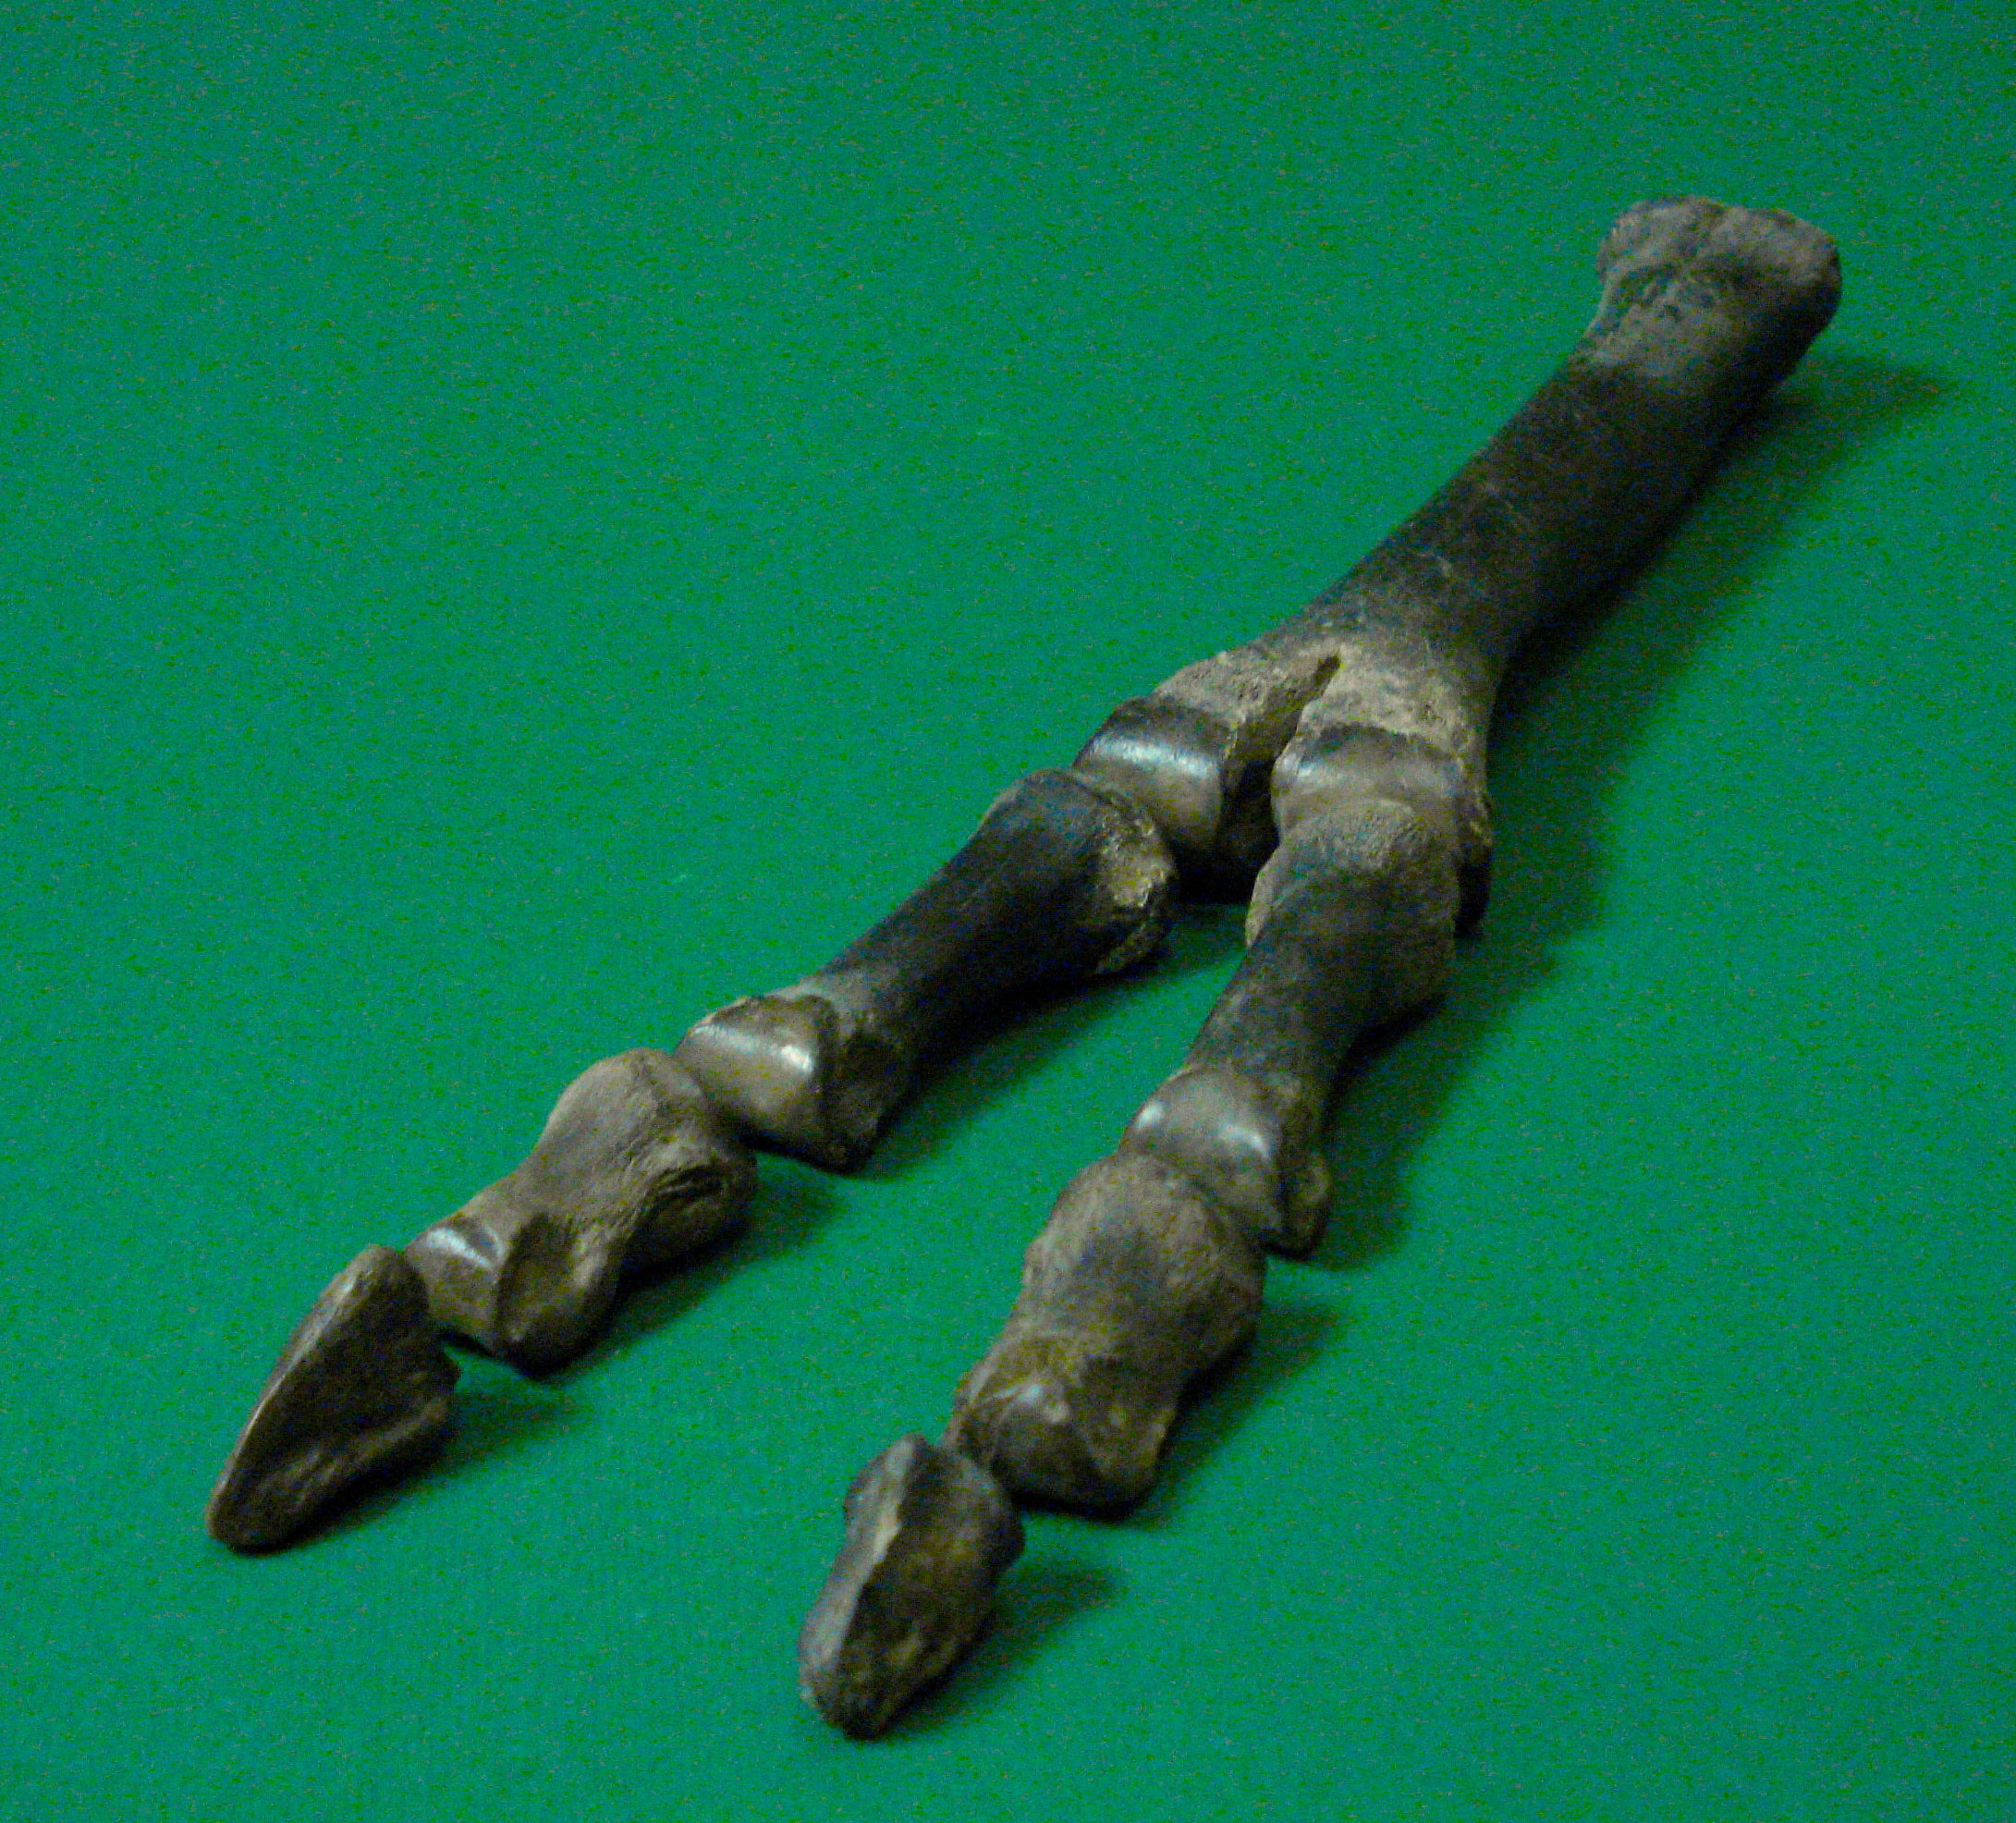 camel leg bone and foot digits